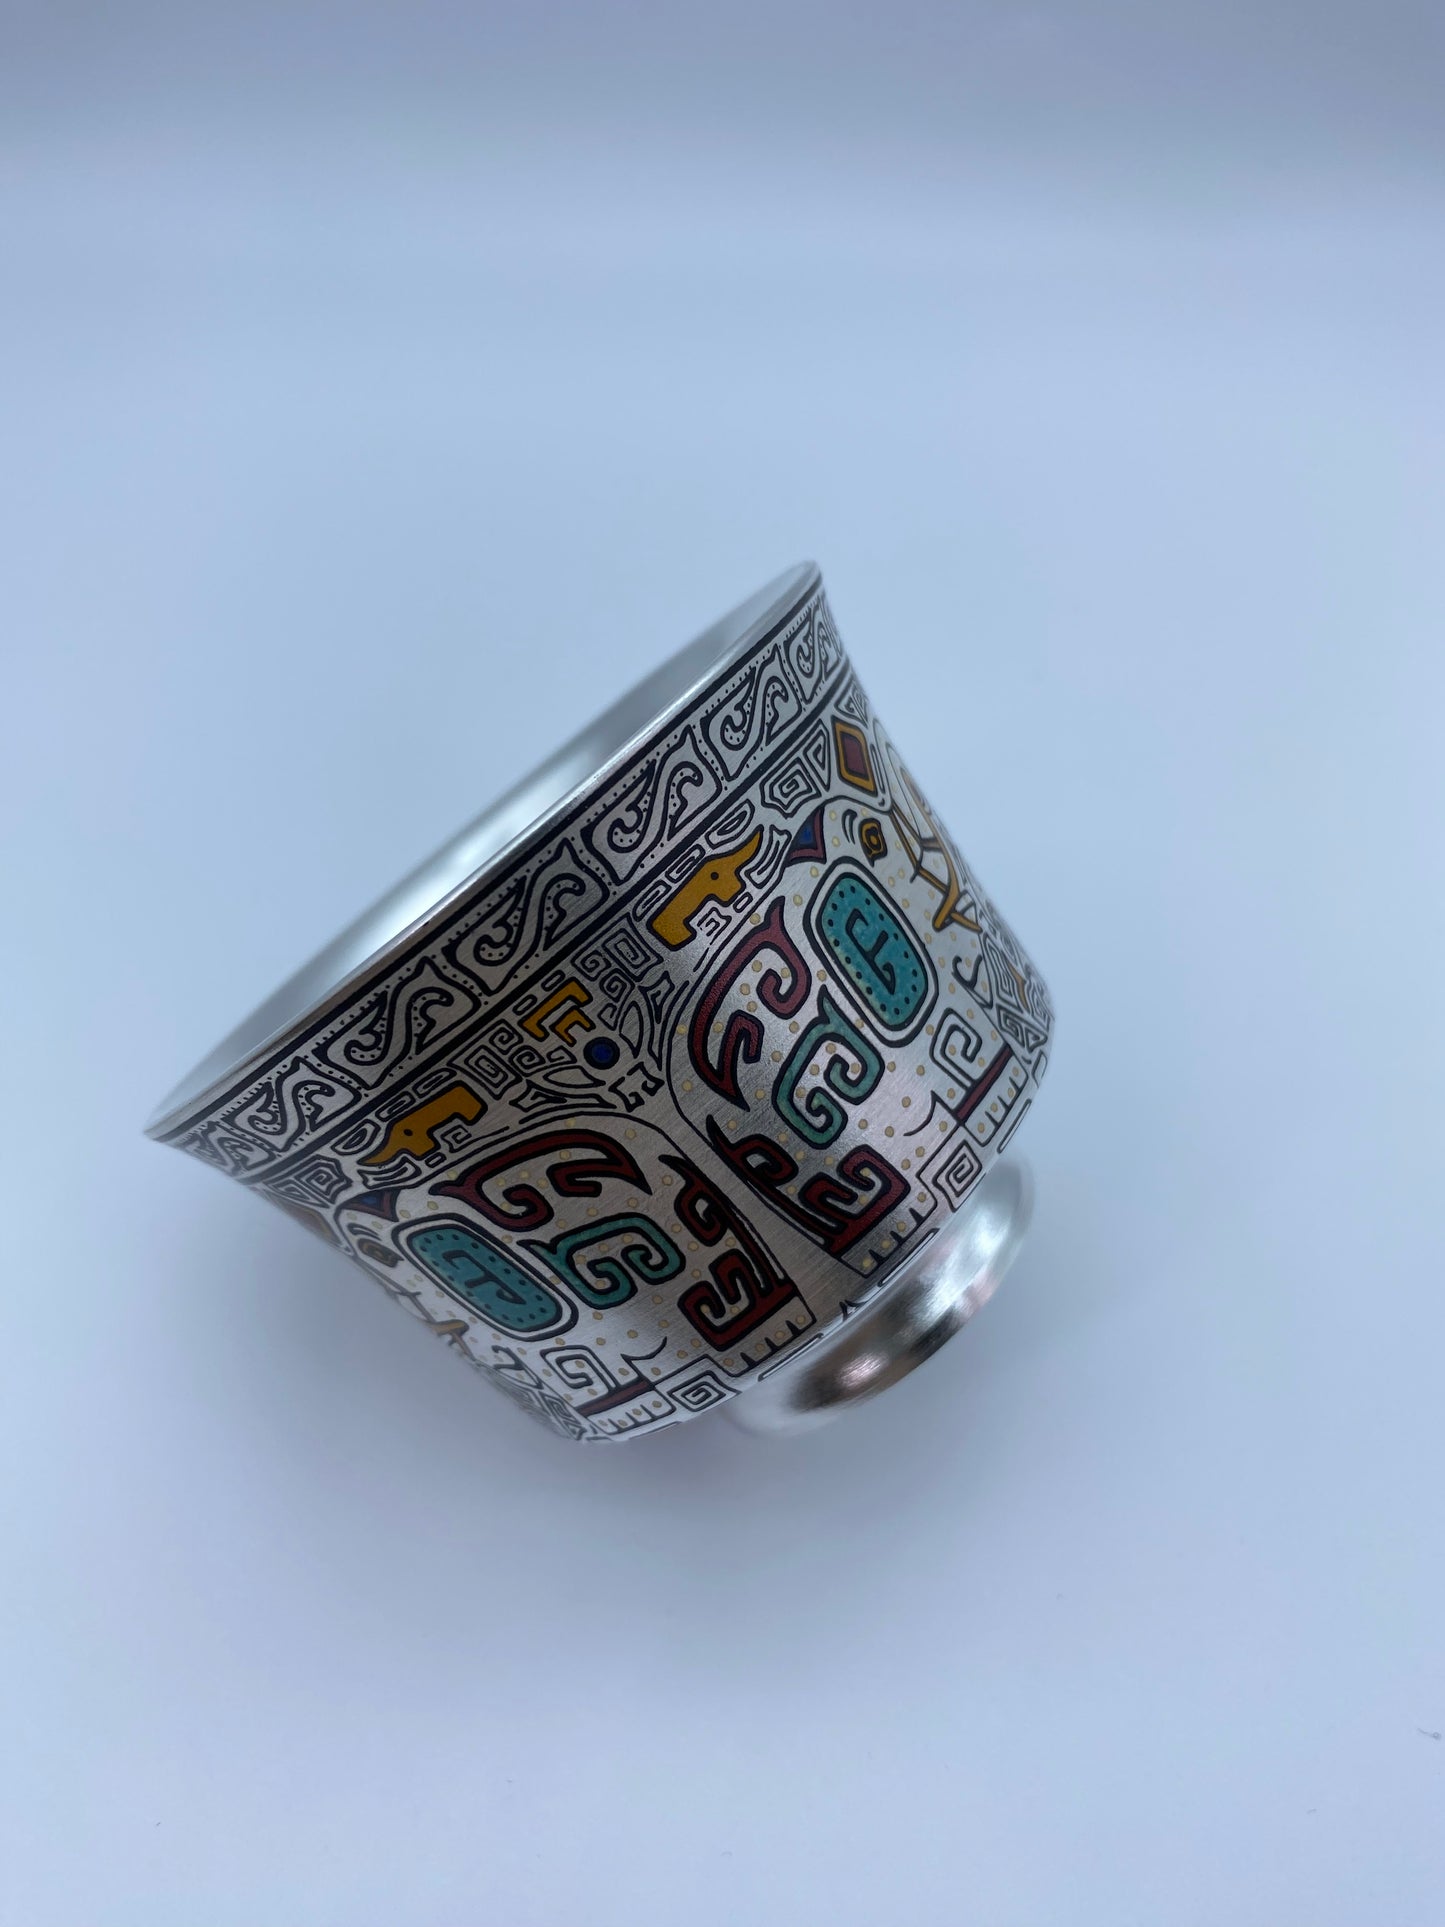 Ceramic gilt silver teacups, teacups, master cups, tea cups, gold and silver